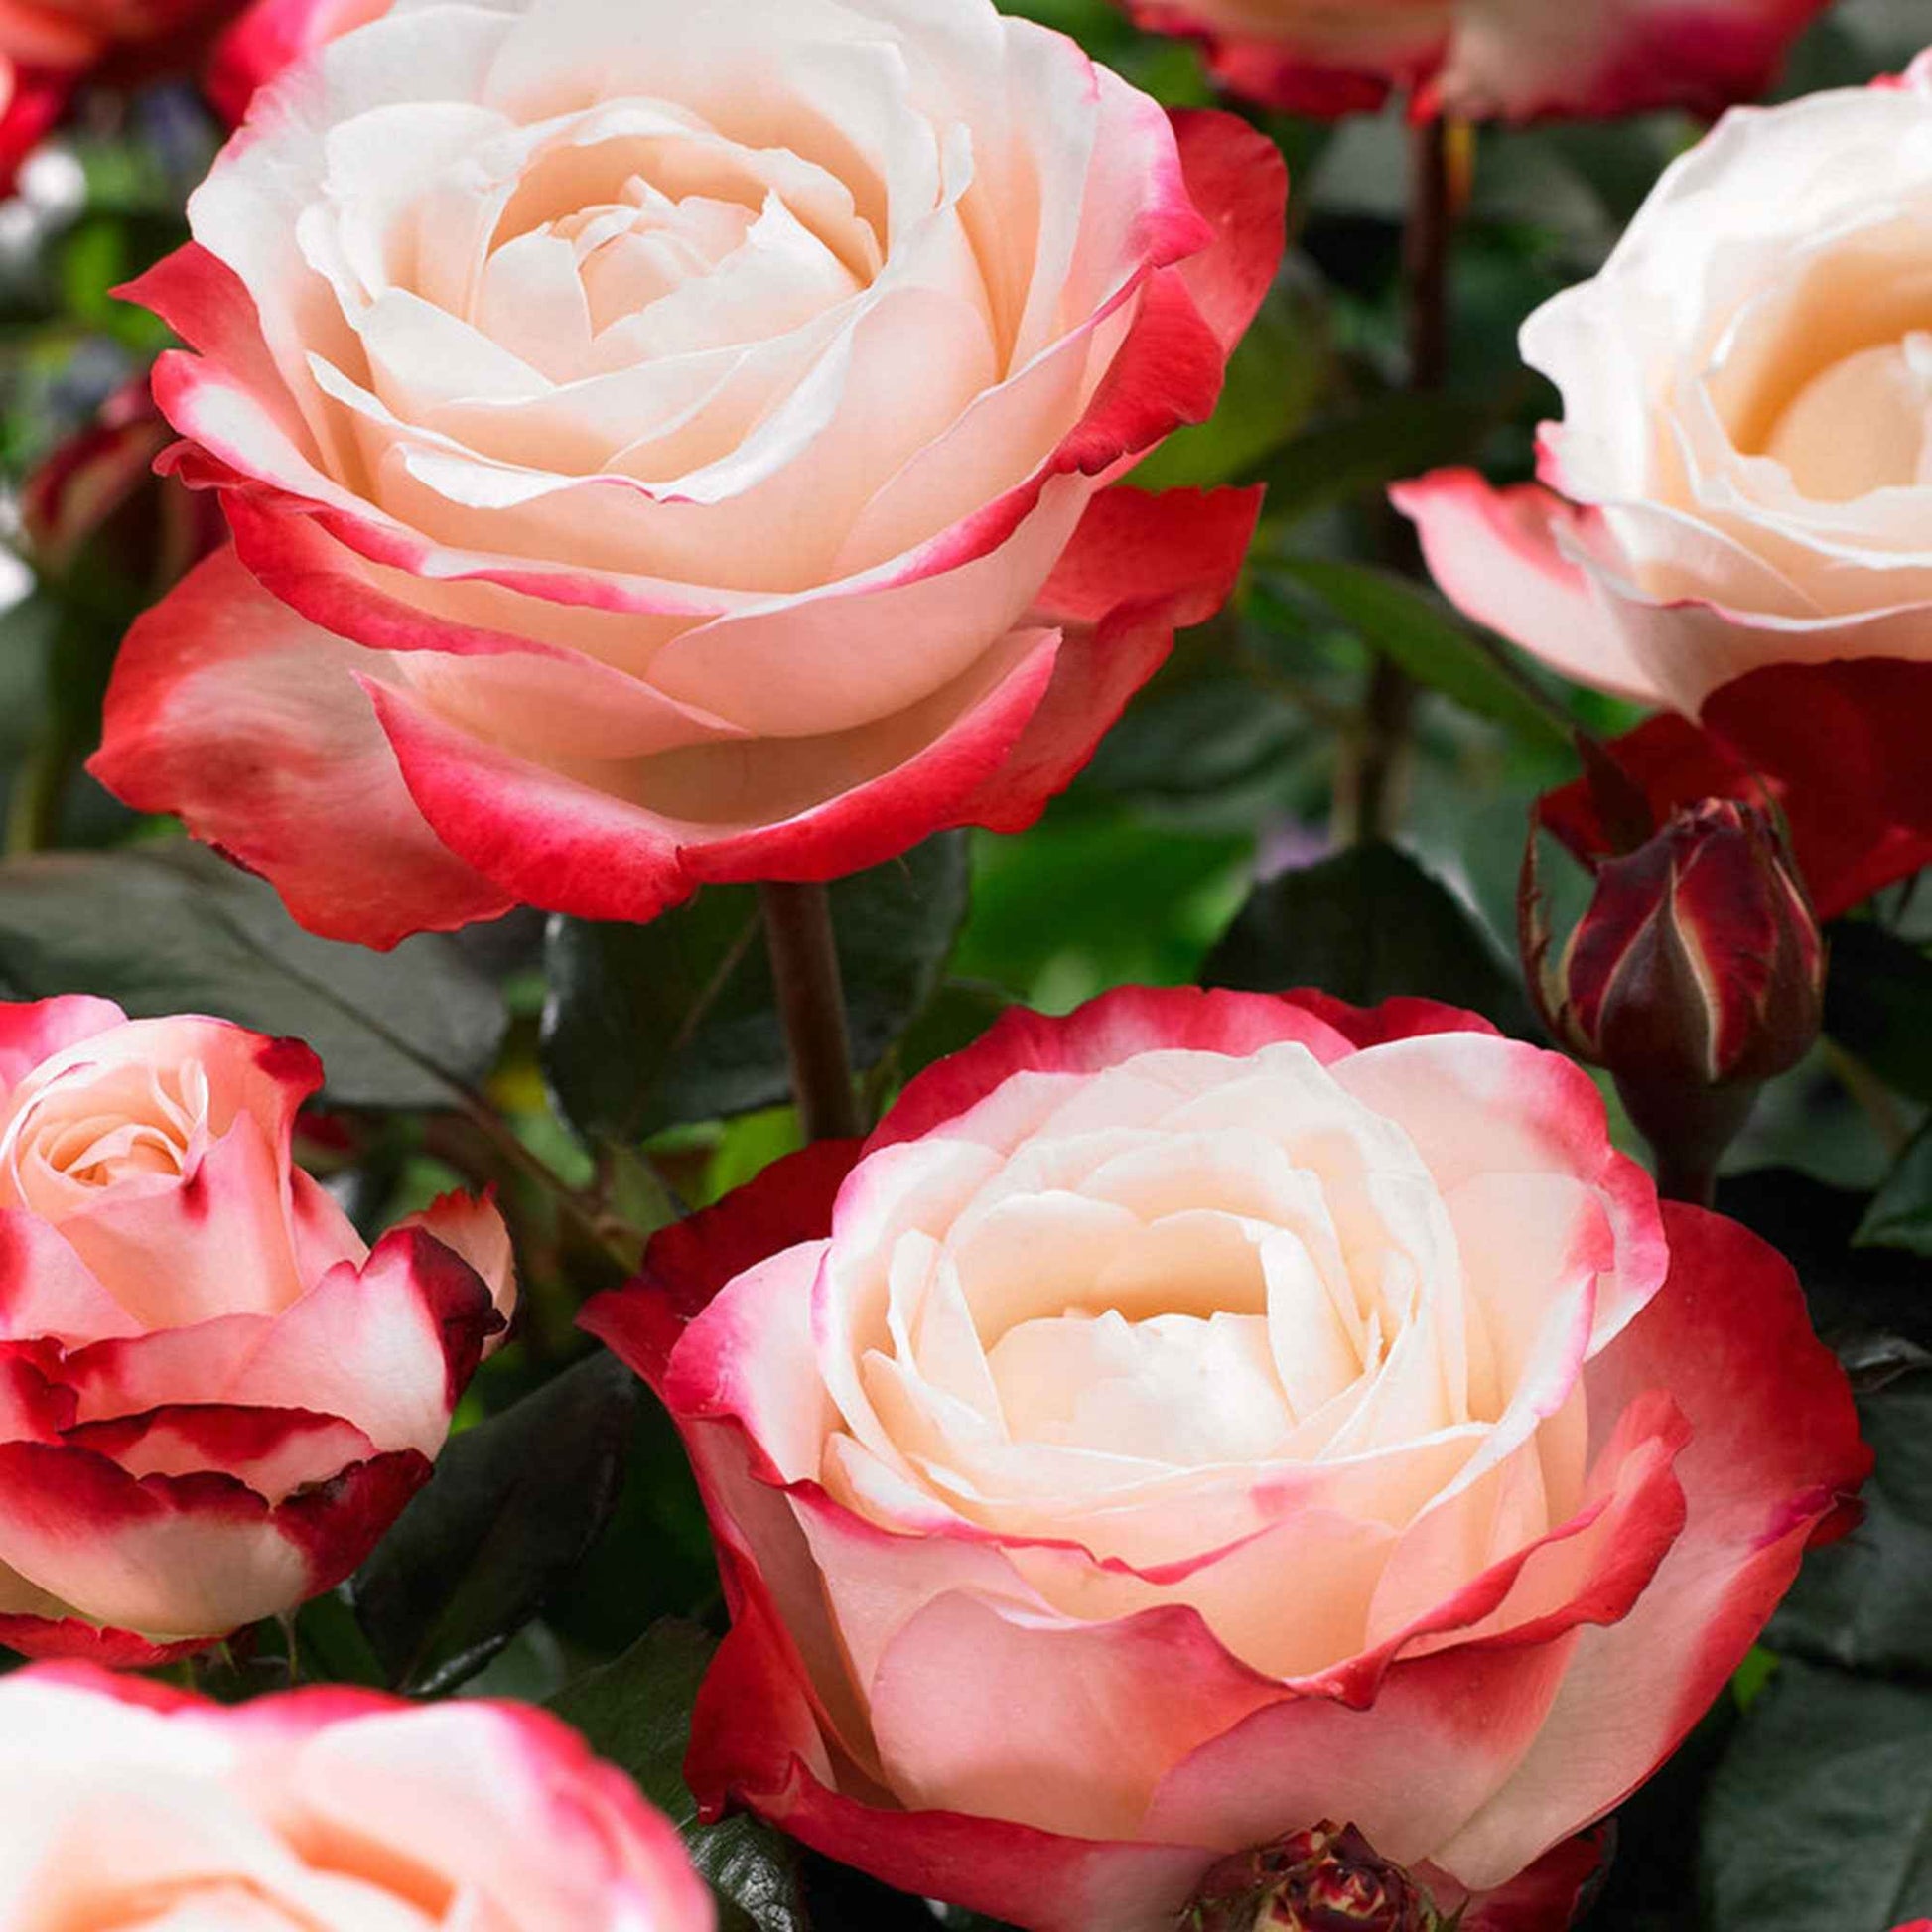 Edelrose 'Nostalgie' - Rosa nostalgie ® - Pflanzensorten